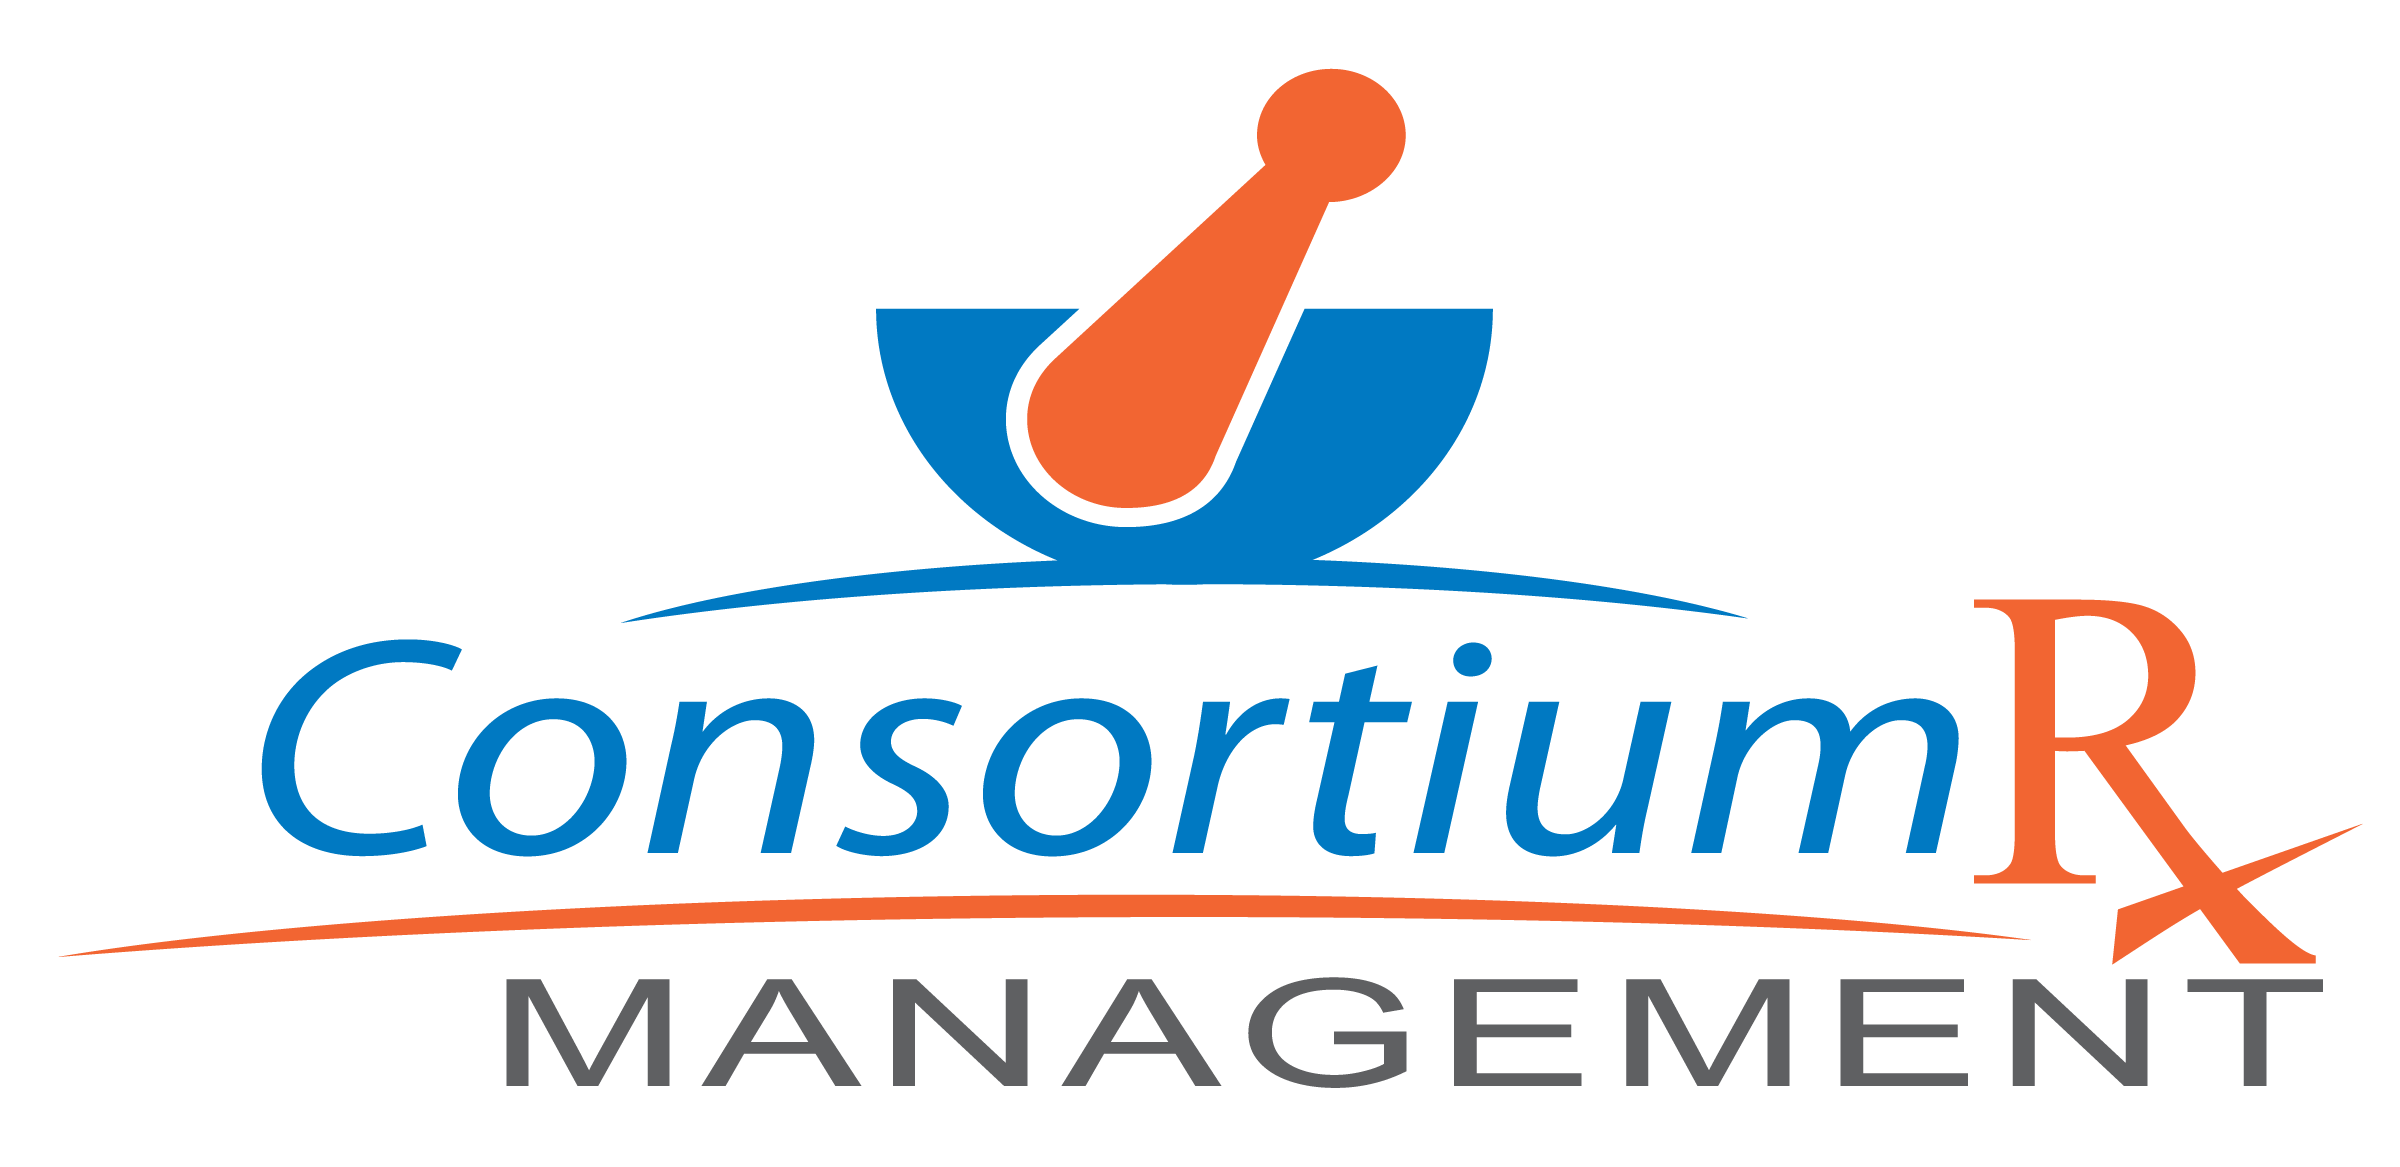 ConsortiumRx Management Inc.